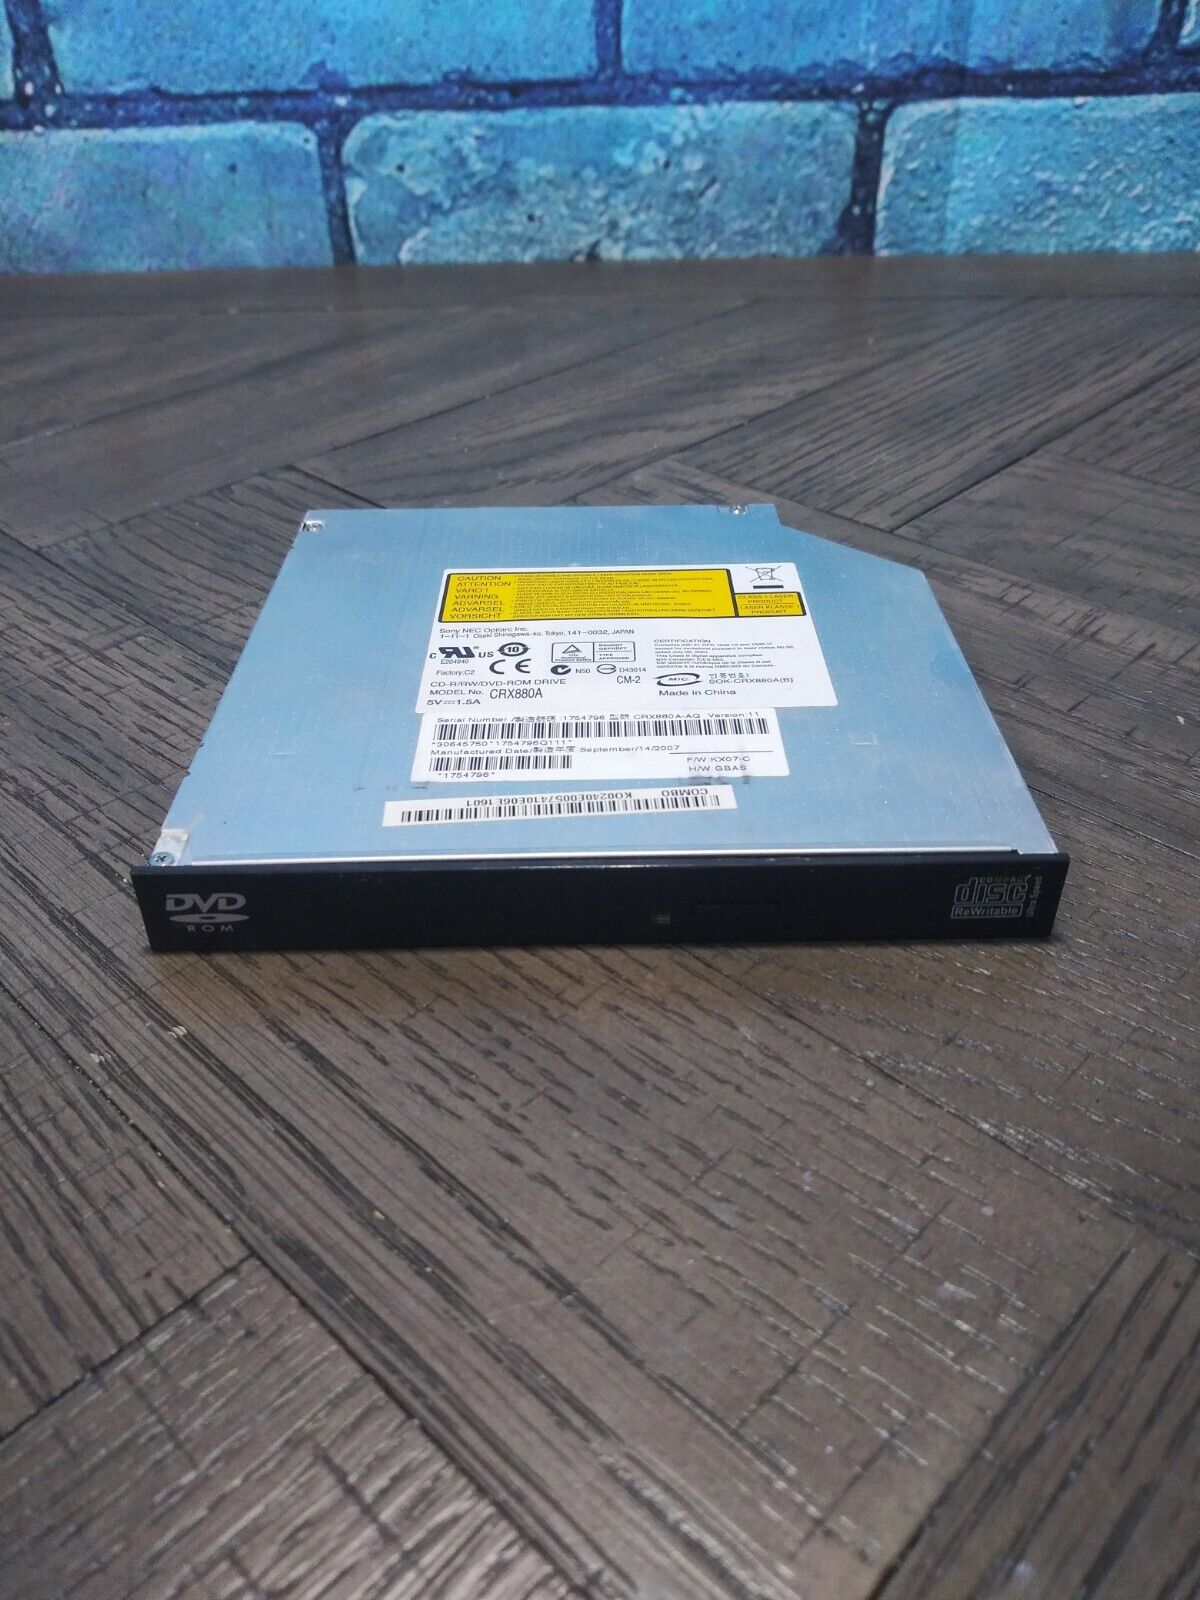 CD-R/RW/DVD-ROM Drive Sony Model CRX880A Class 1 Laser Product (CC)